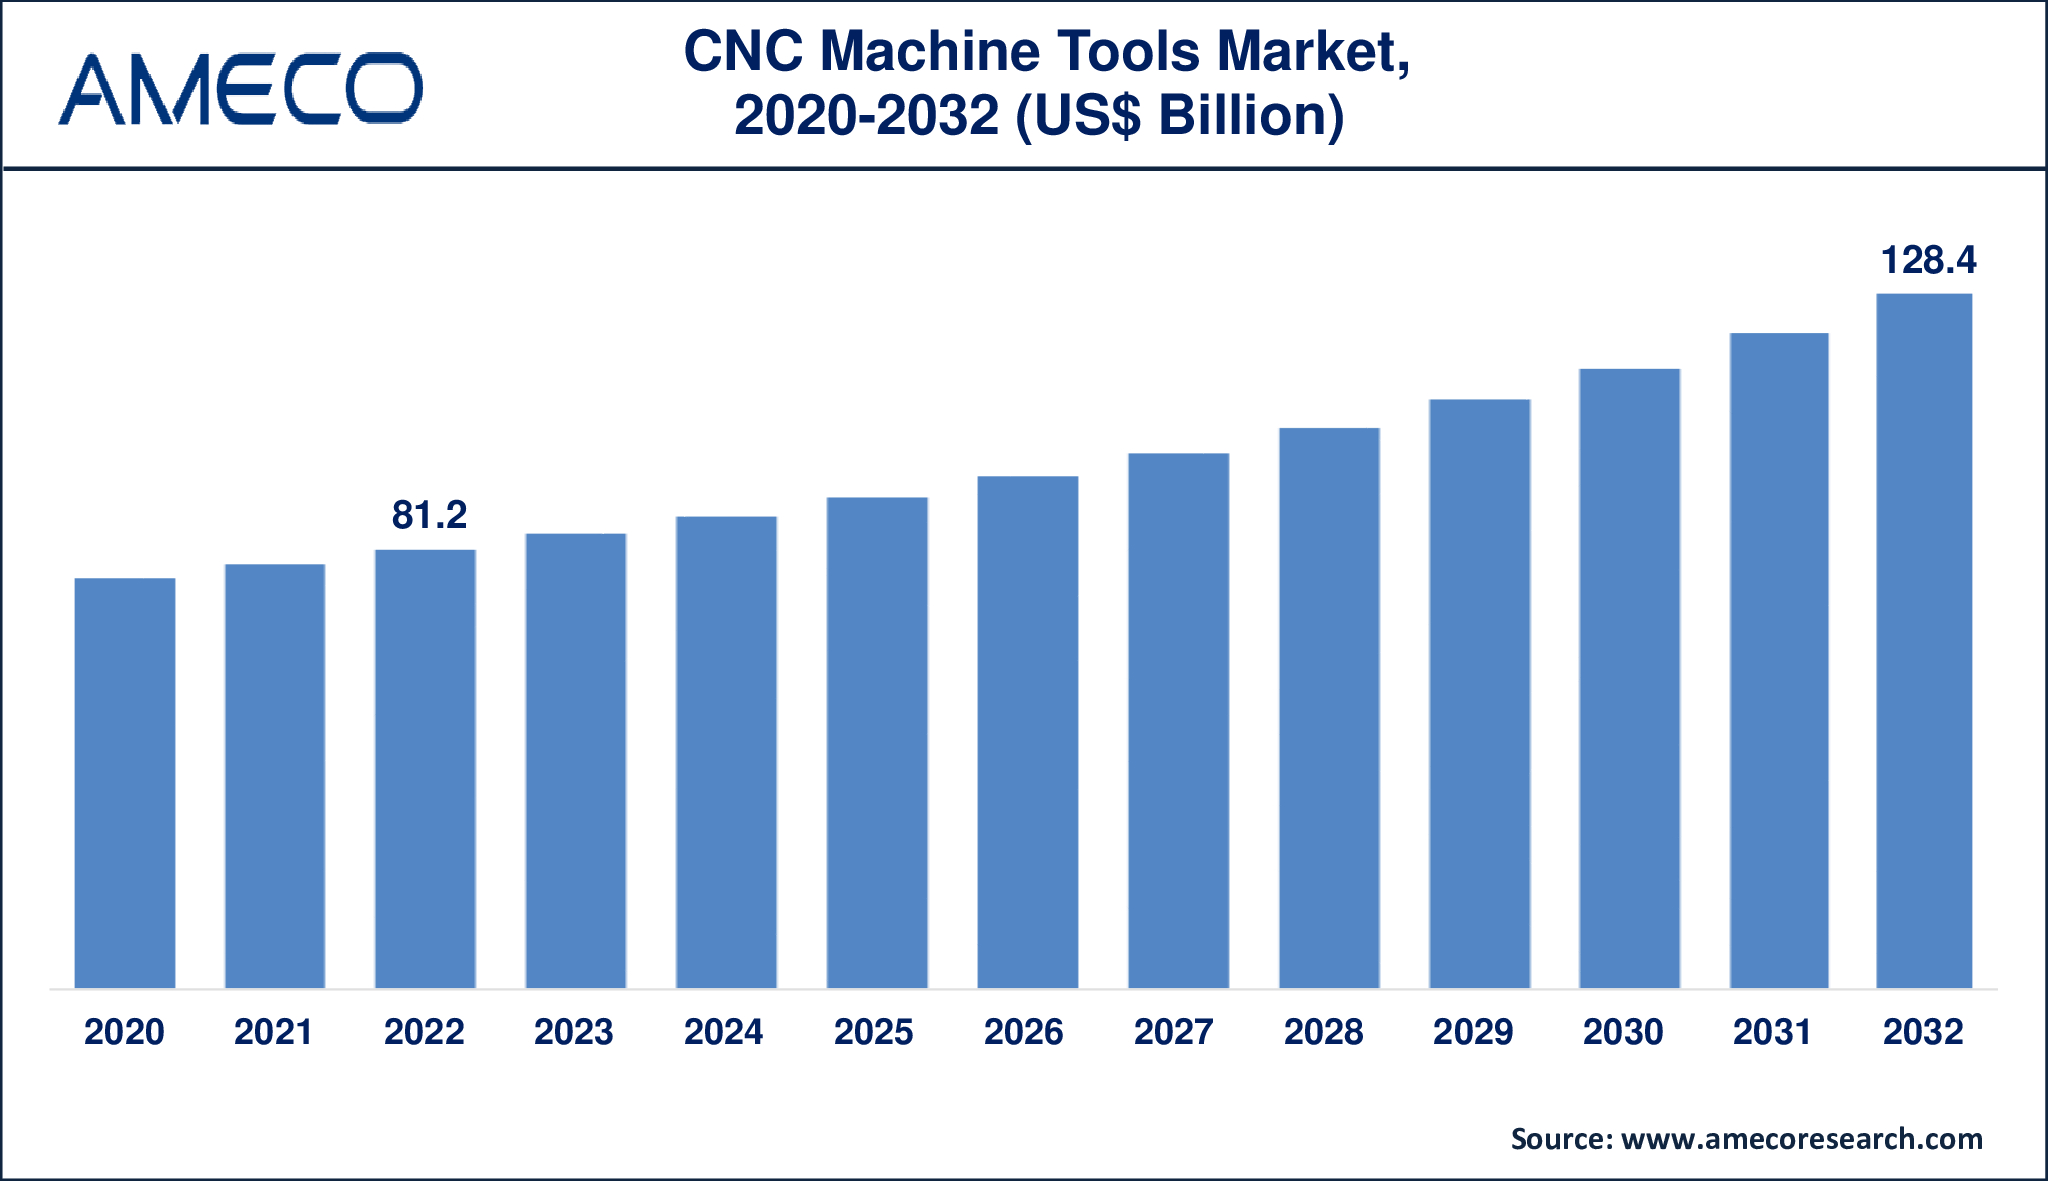 CNC Machine Tools Market Size